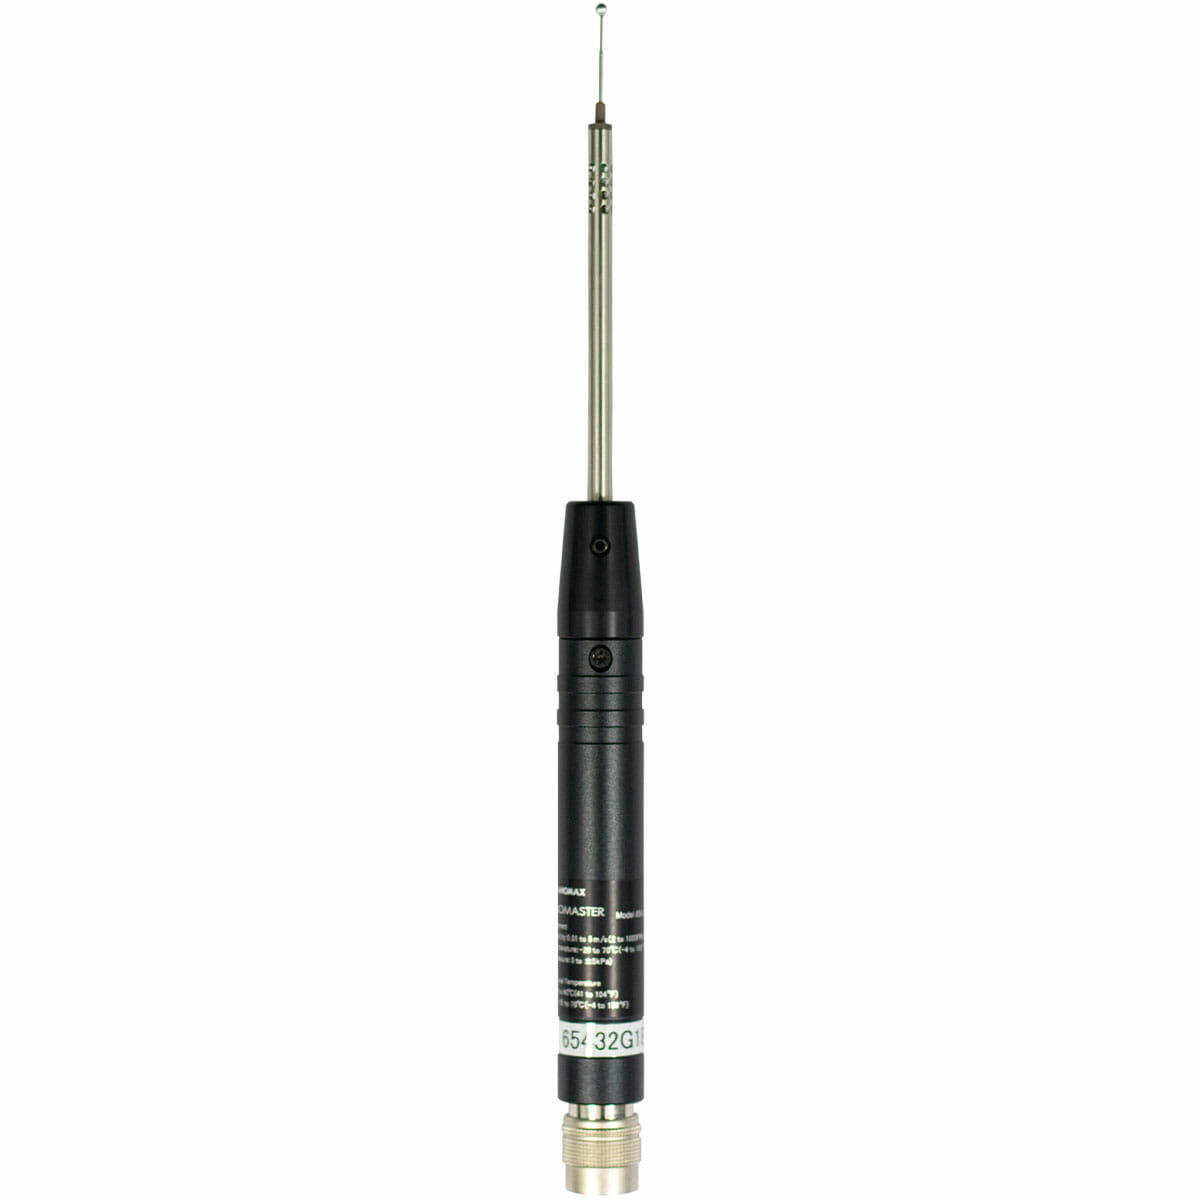 Kanomax Climomaster Anemometer Probe - Model 6543-2G